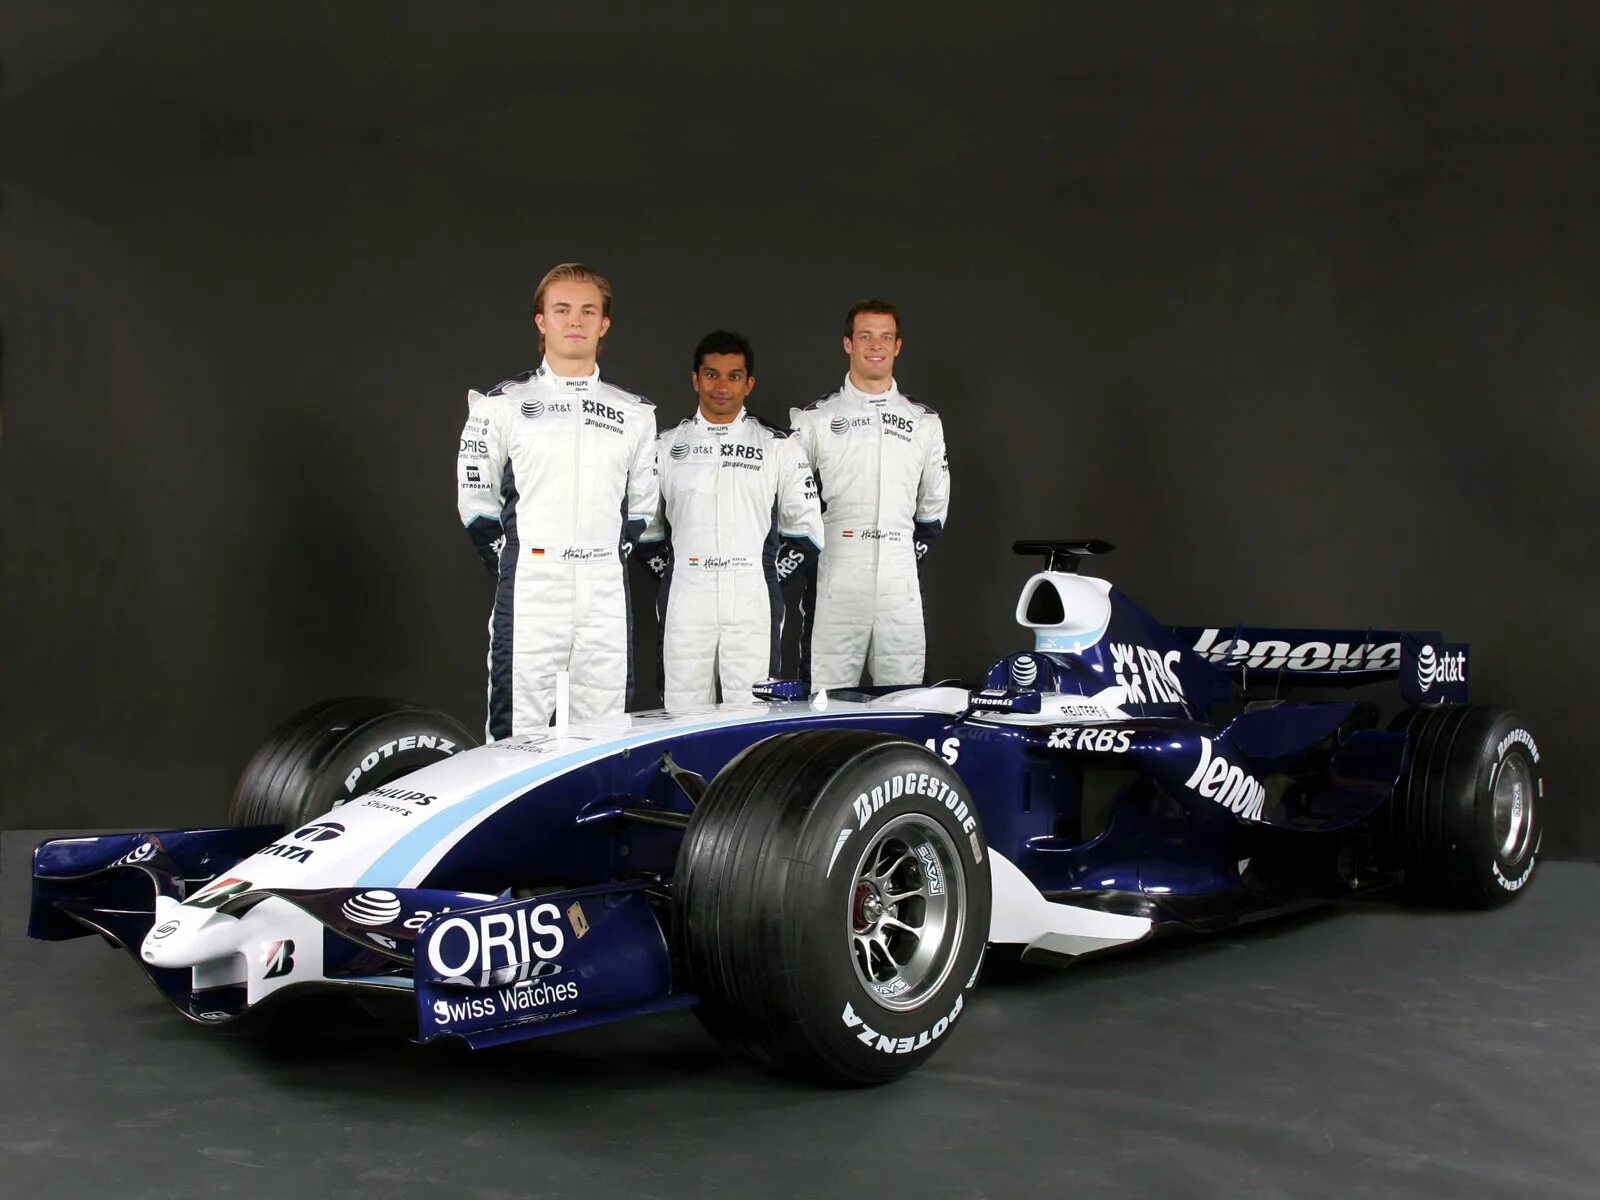 Формула 1 11. Williams f1 2005. Команда ф1 Вильямс. Williams f1 Team. Болиды ф1 Вильямс.